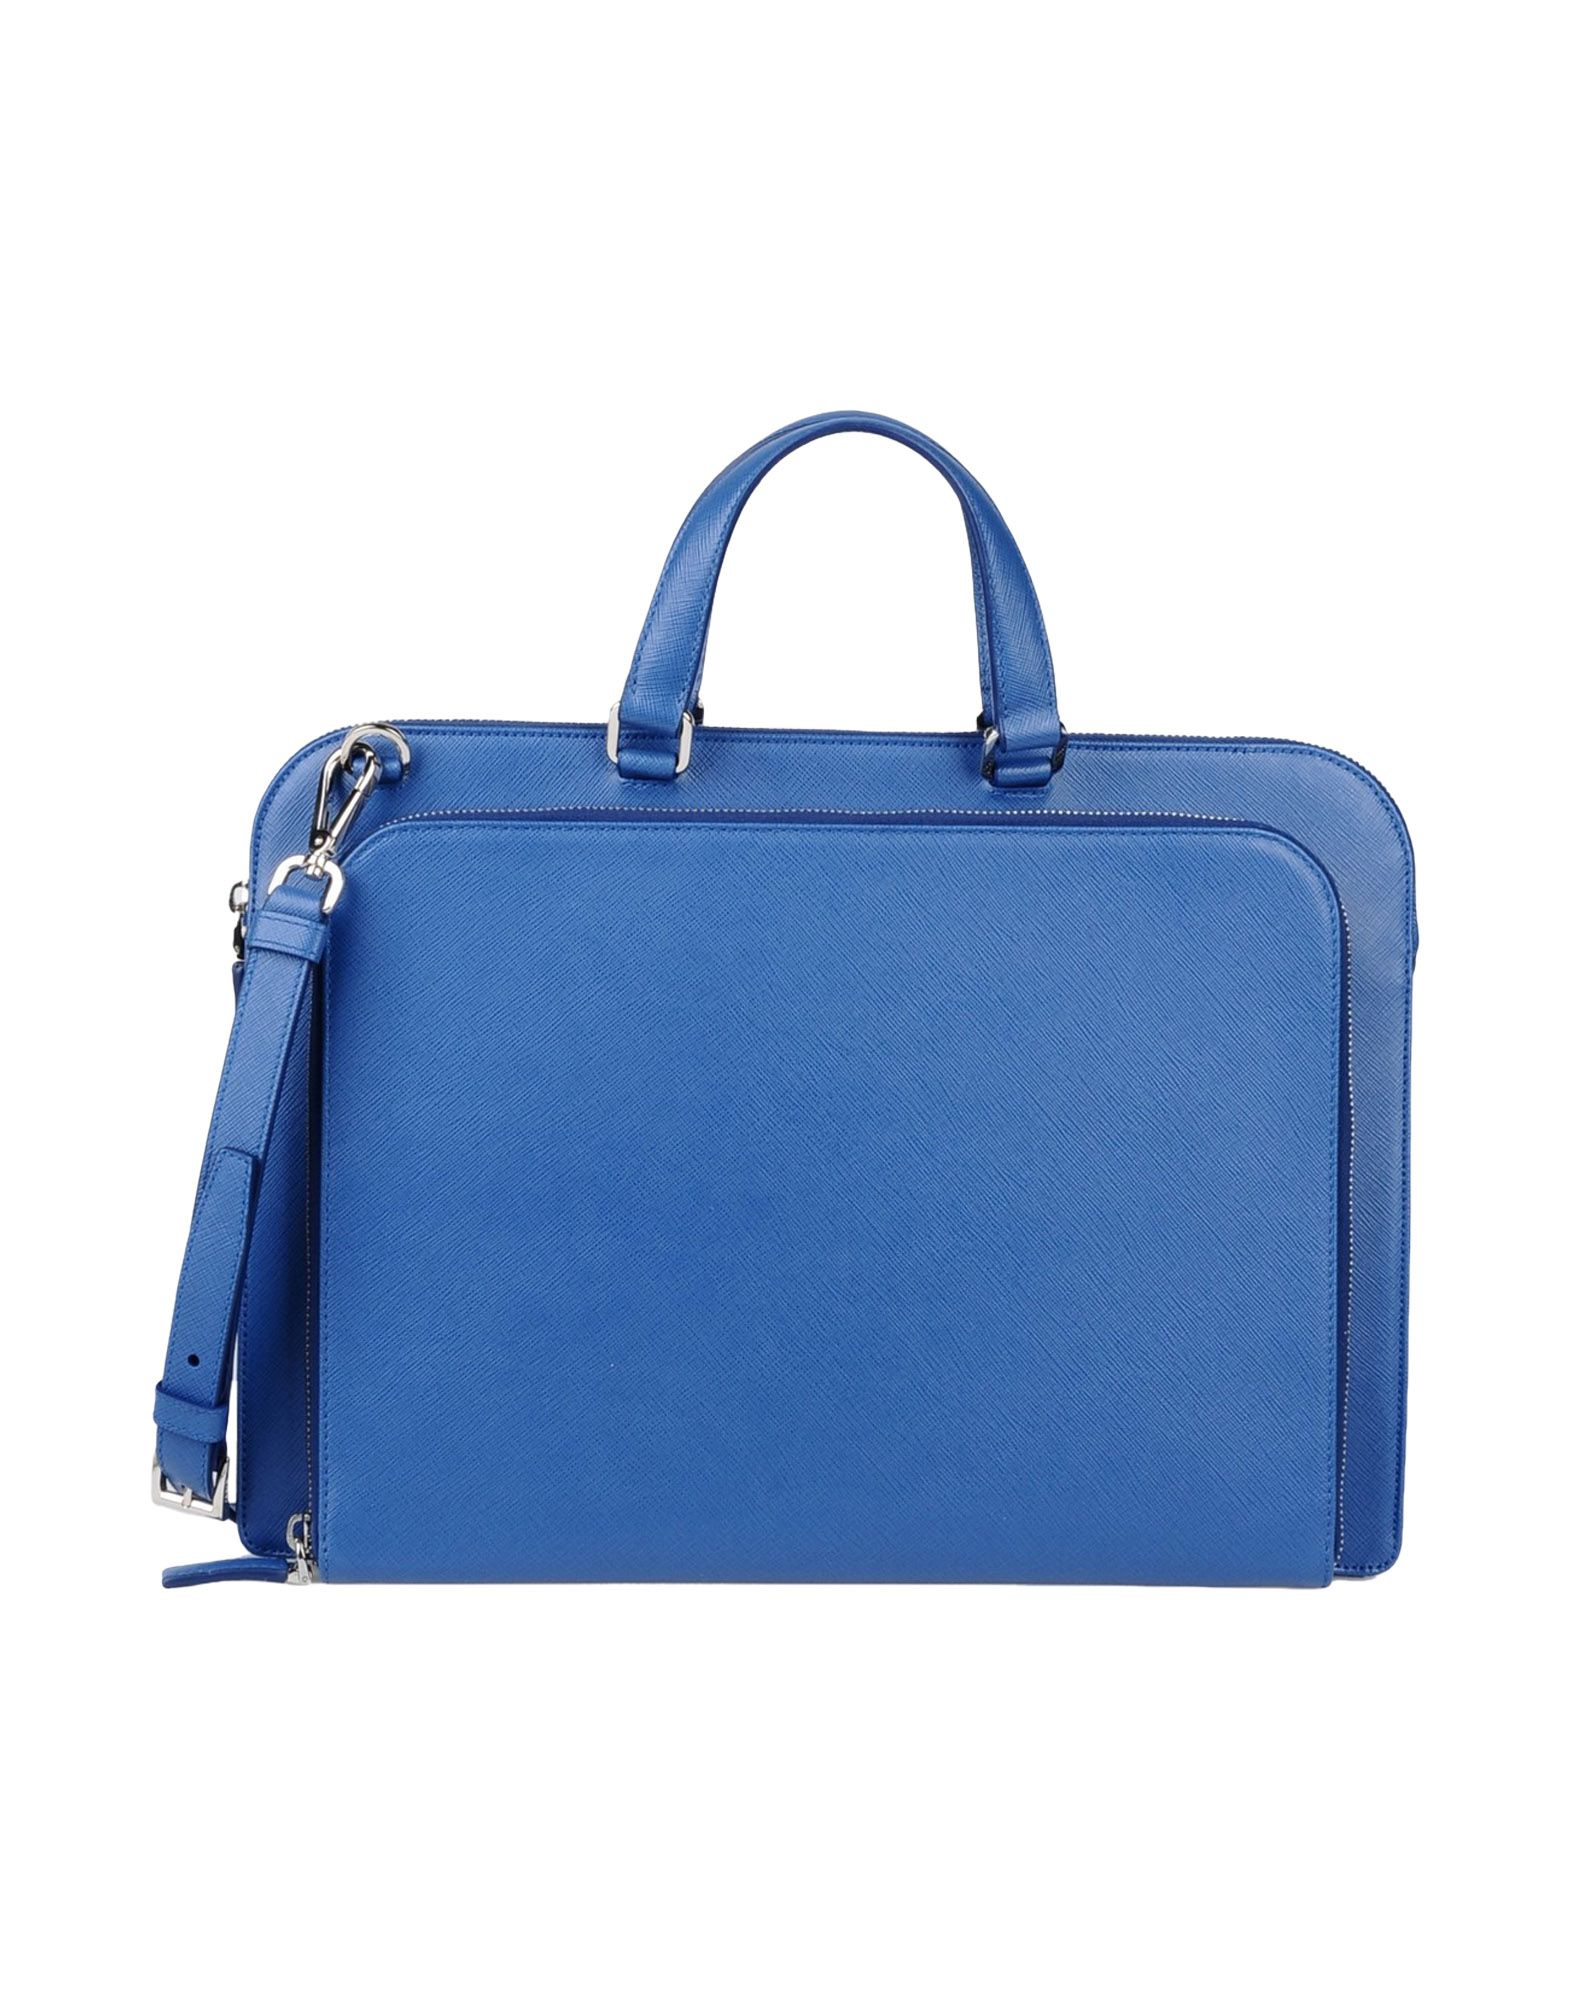 Lyst - Prada Work Bags in Blue